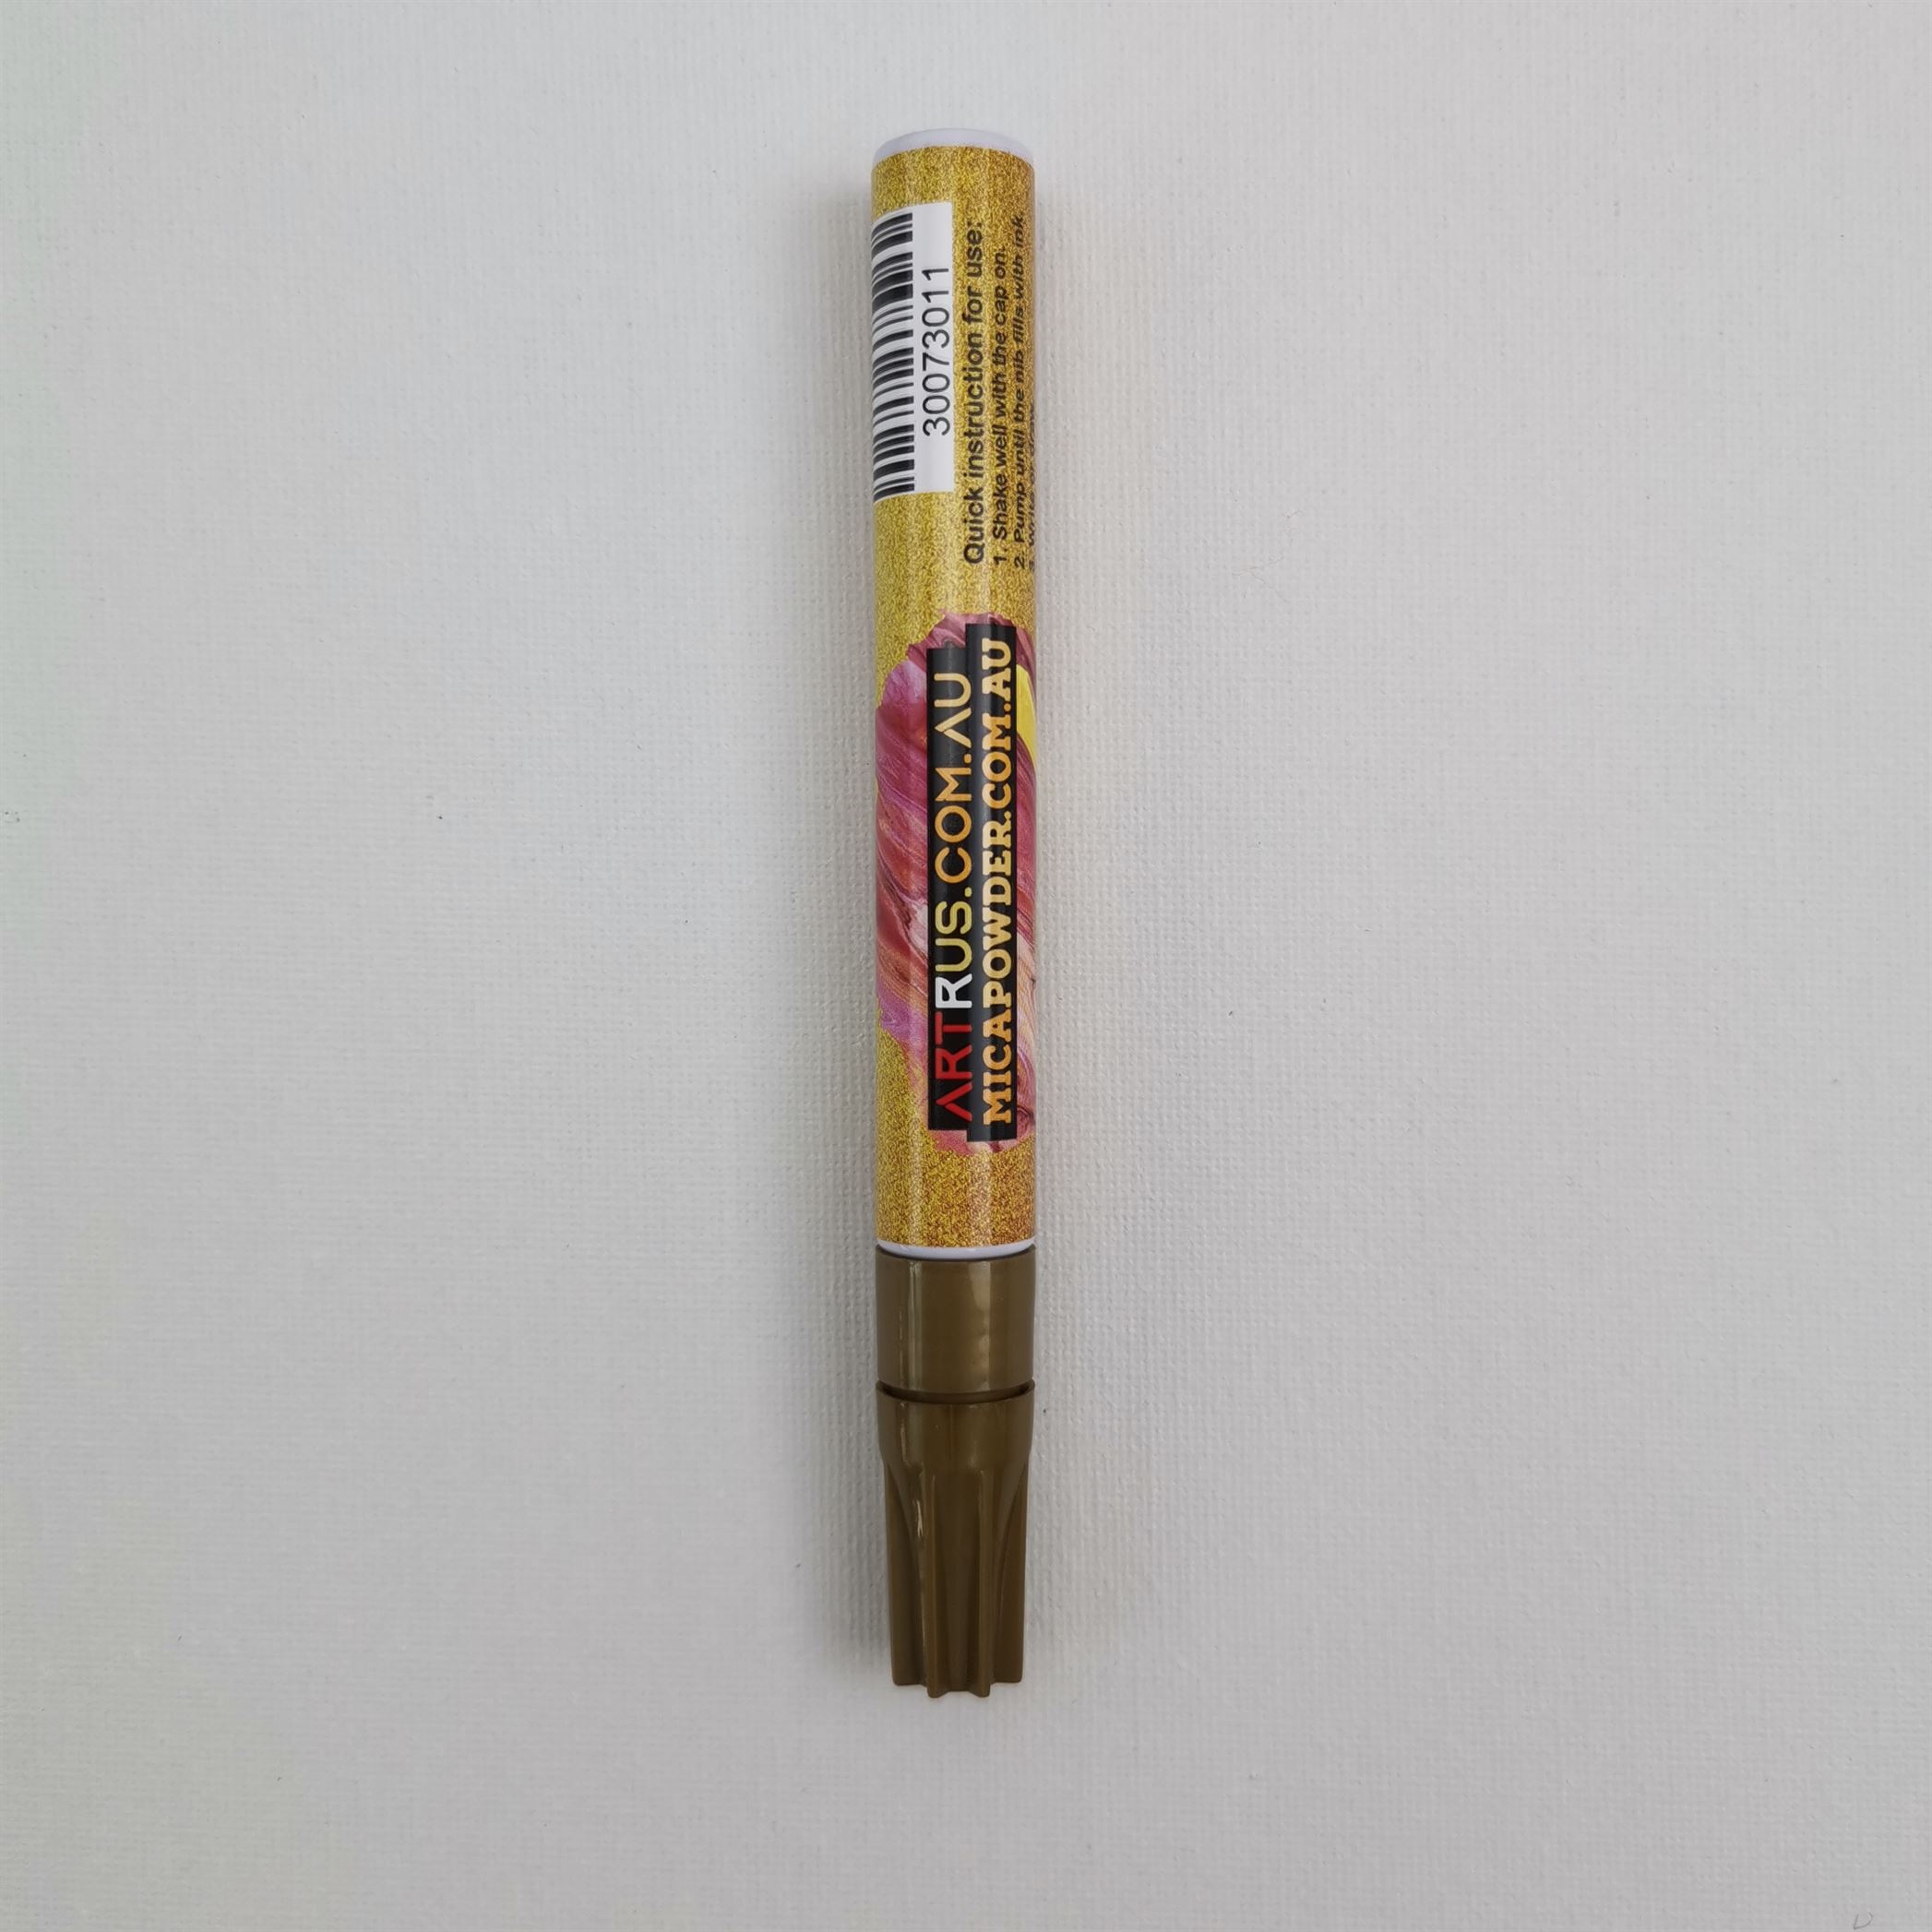 Metalic-Gold-Pen-3.jpg